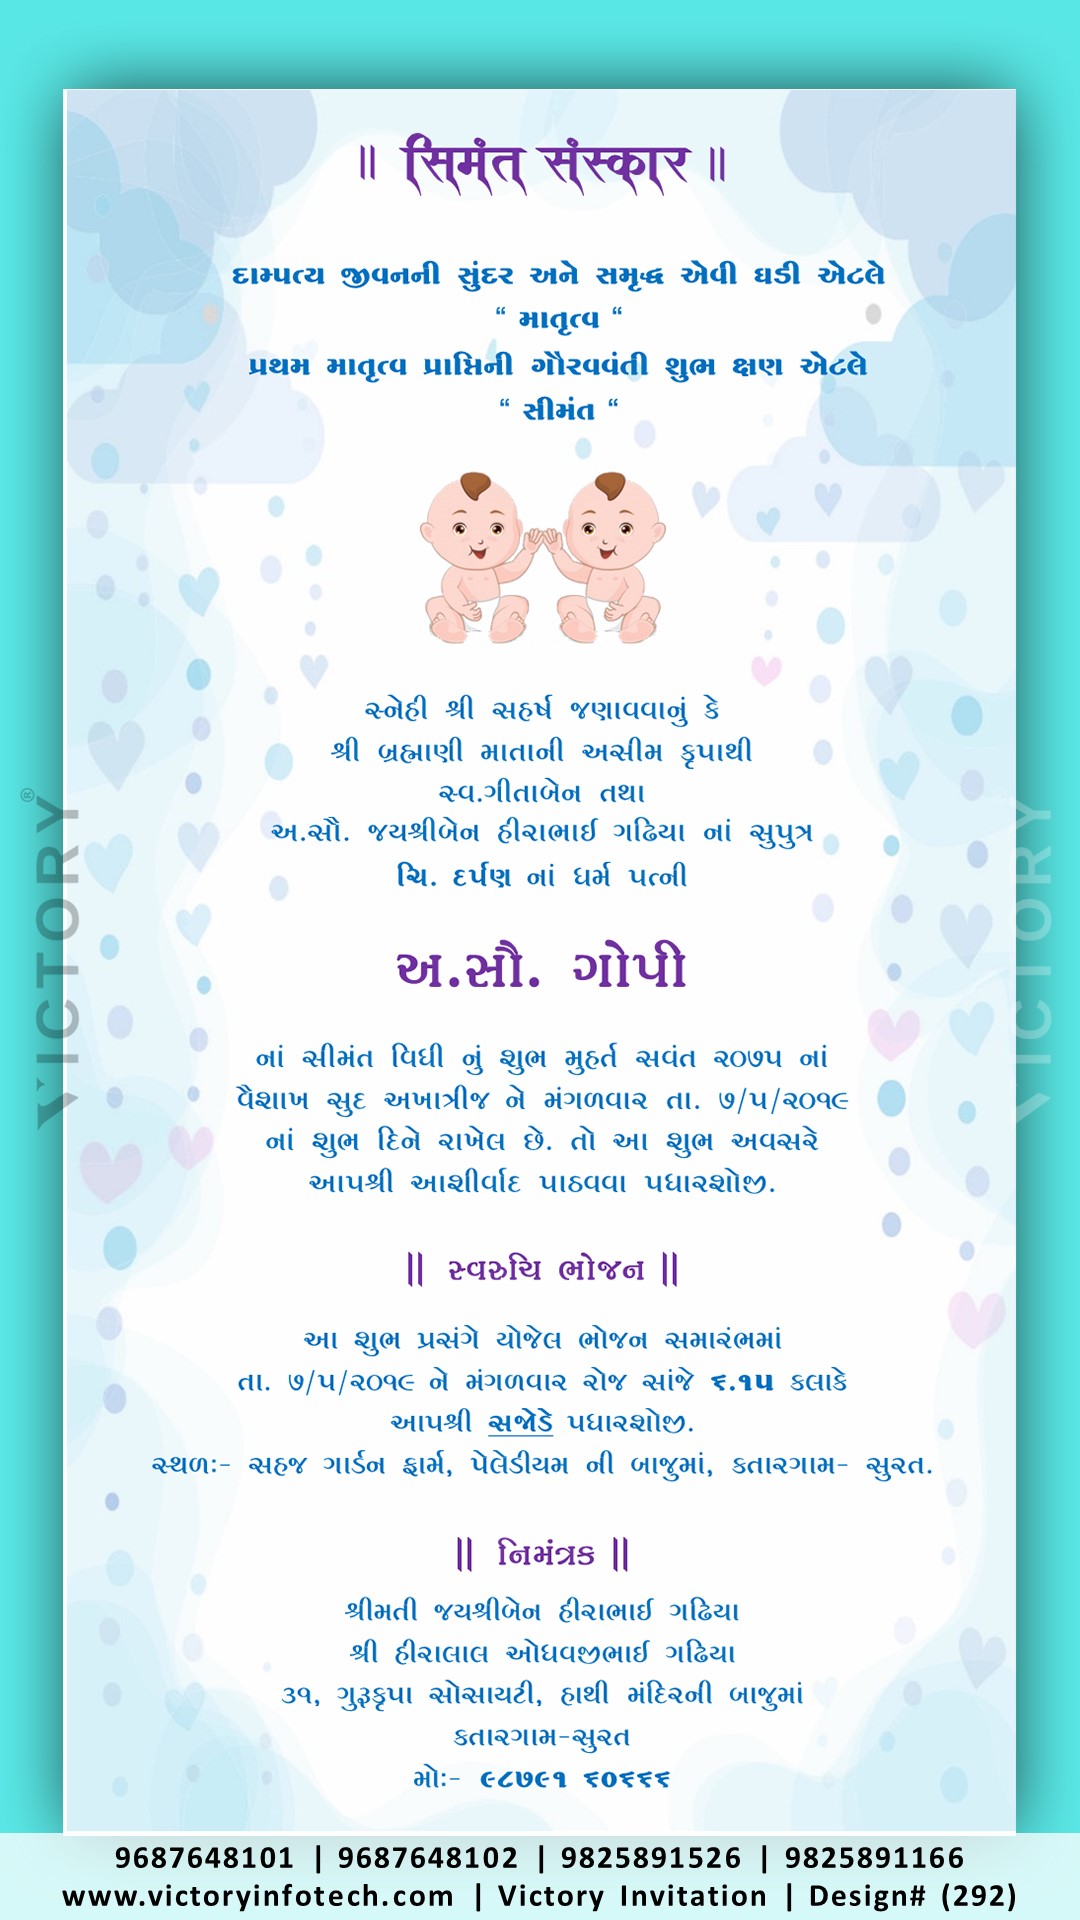 fun-theme-simant-vidhi-baby-shower-digital-invitation-card-in-gujarati-language-design-2556